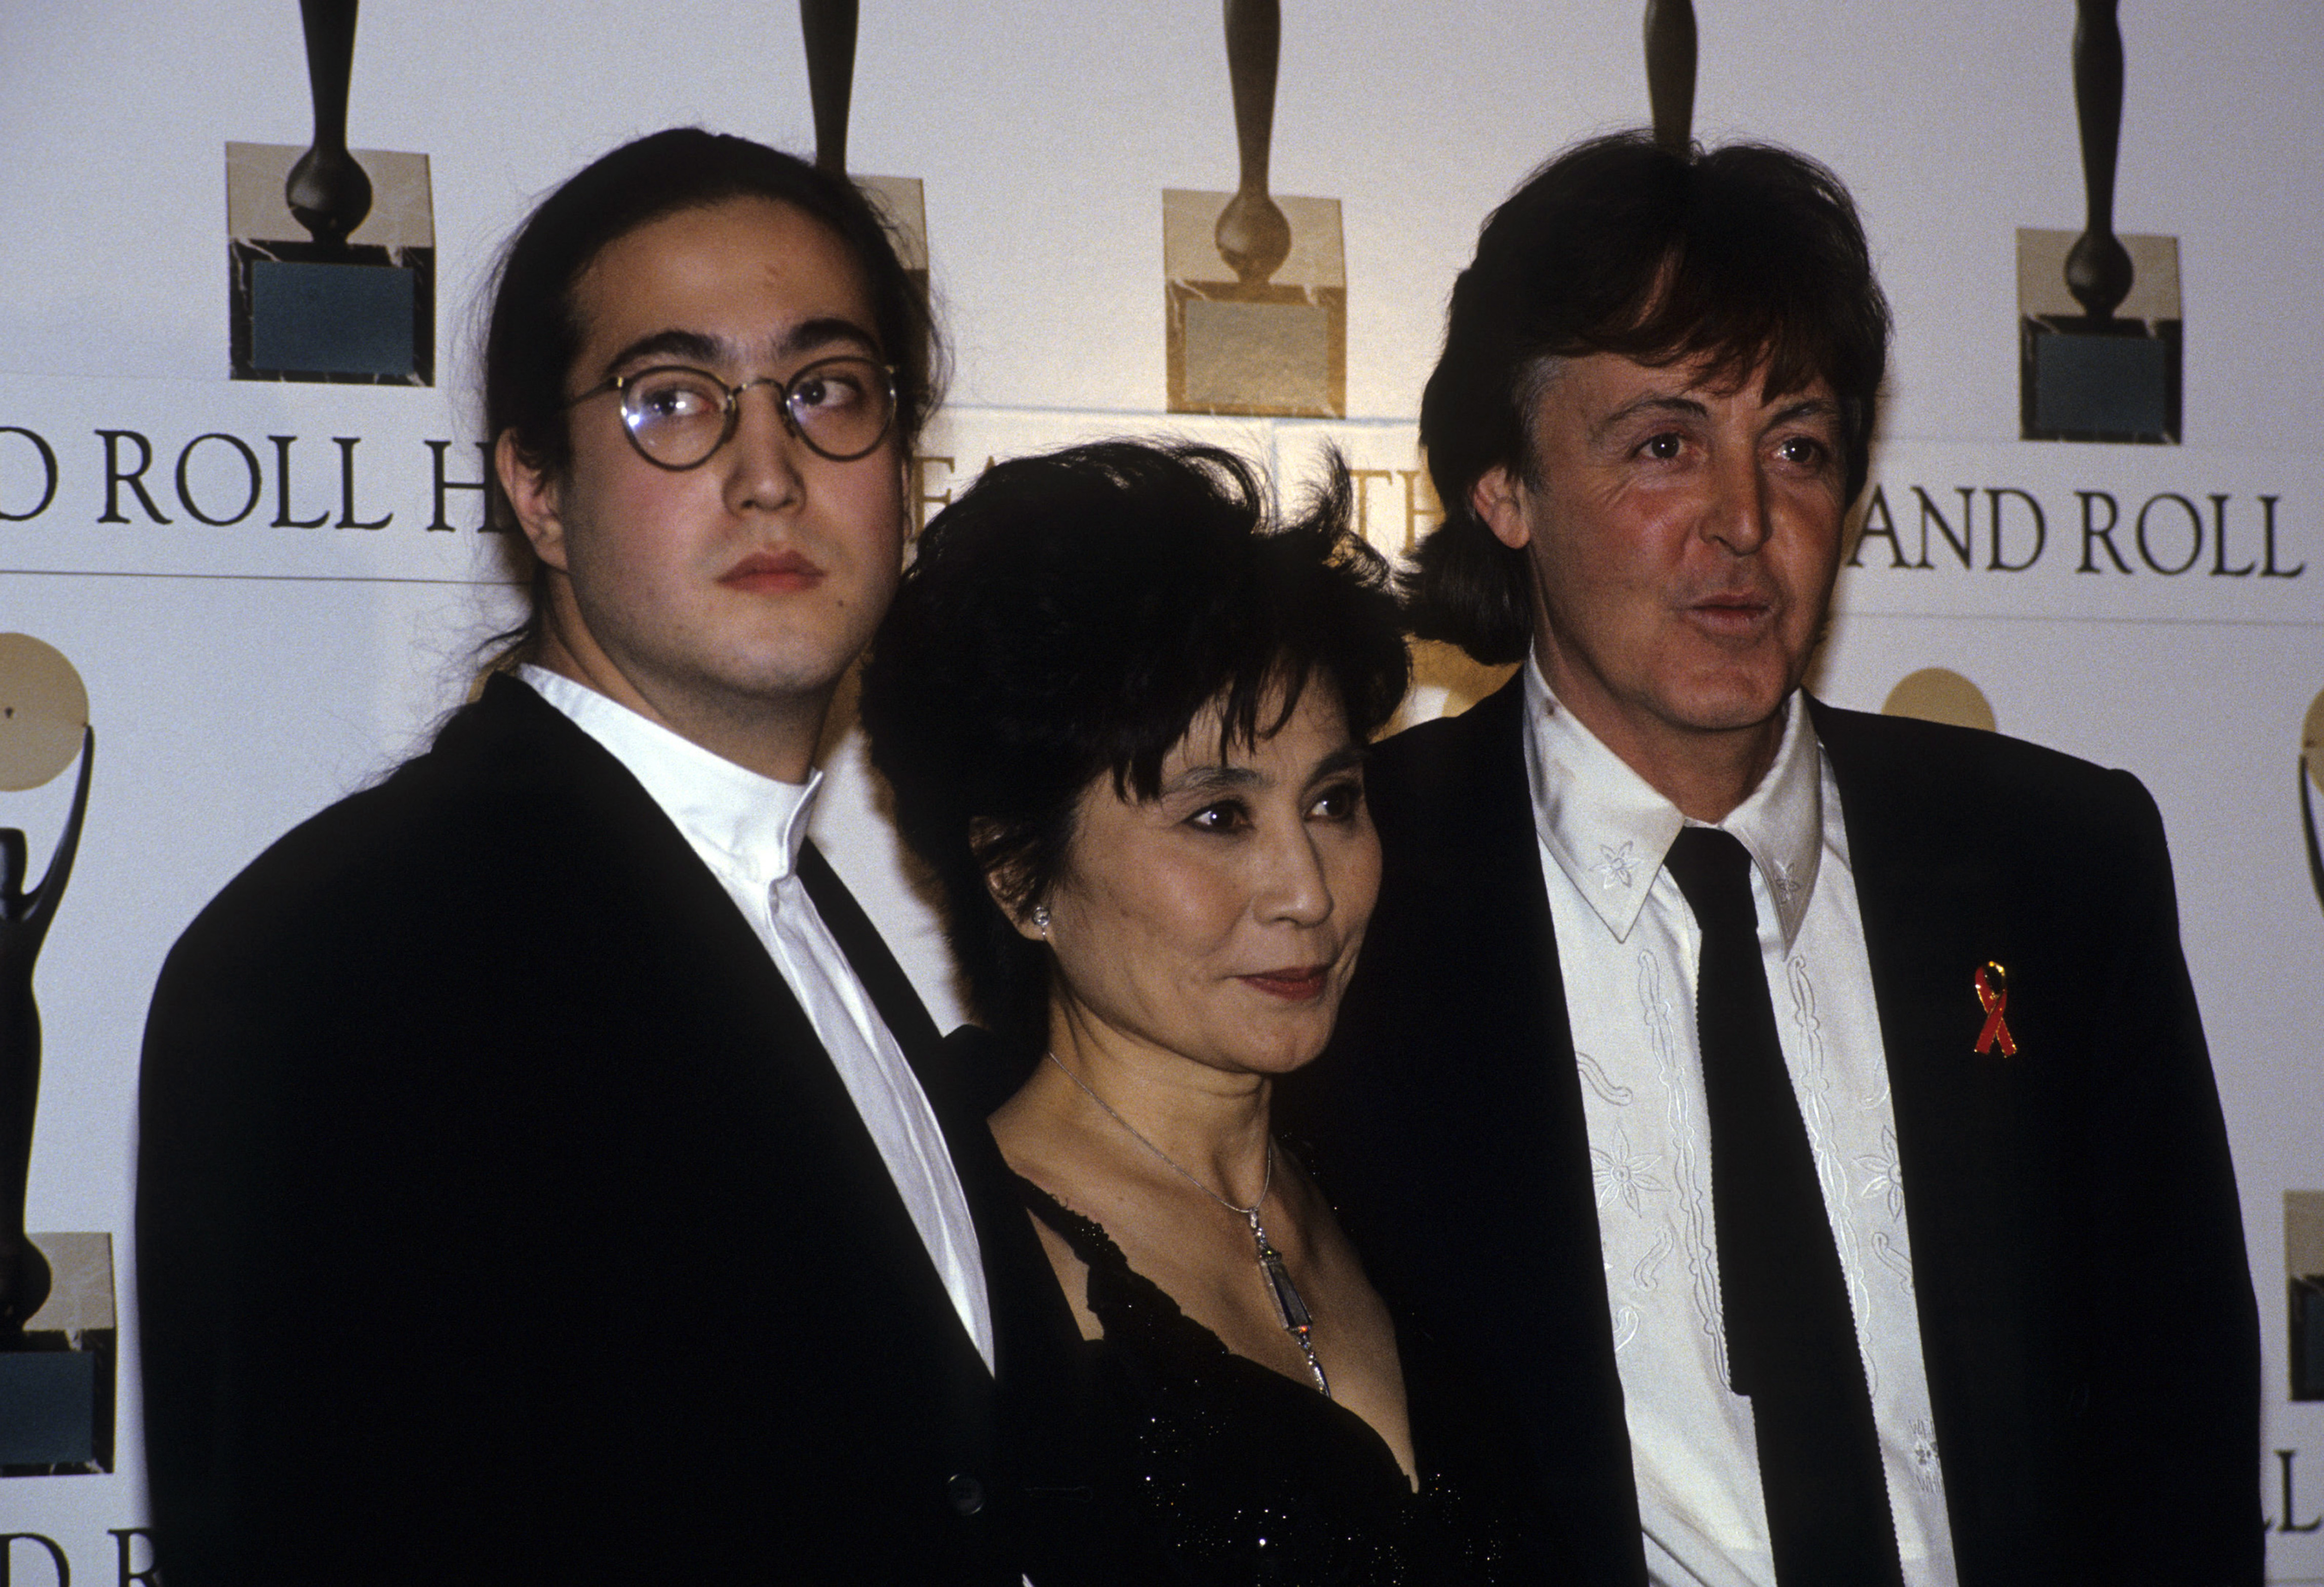 Sean Ono Lennon, Yoko Ono, and Paul McCartney wearing black